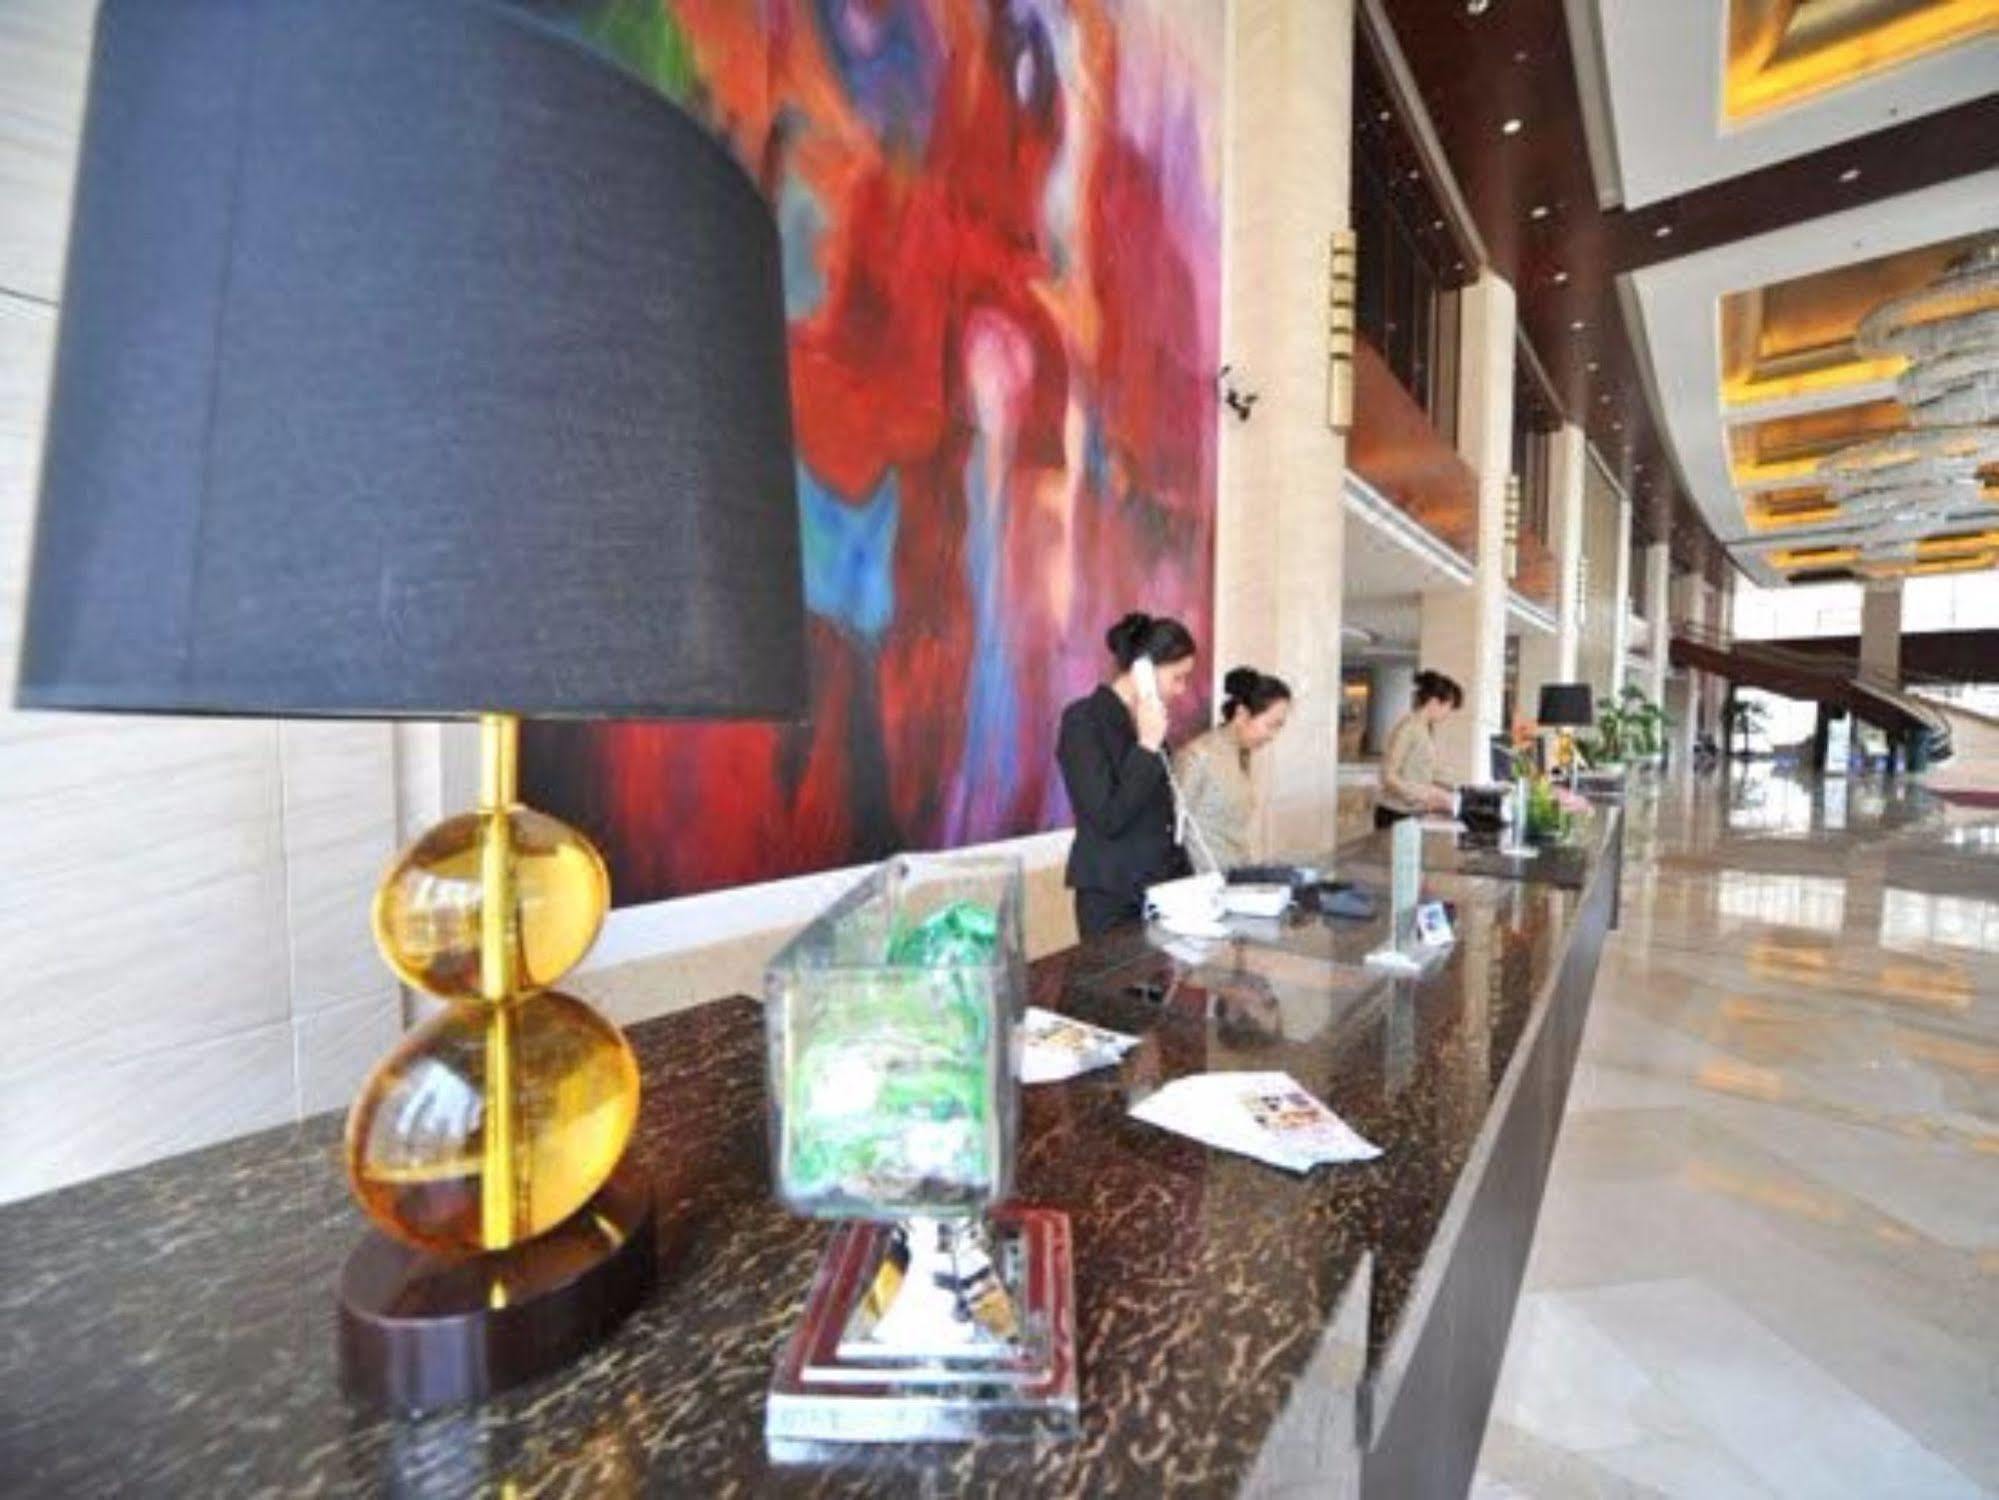 S&N Dalian Hotel Exterior foto